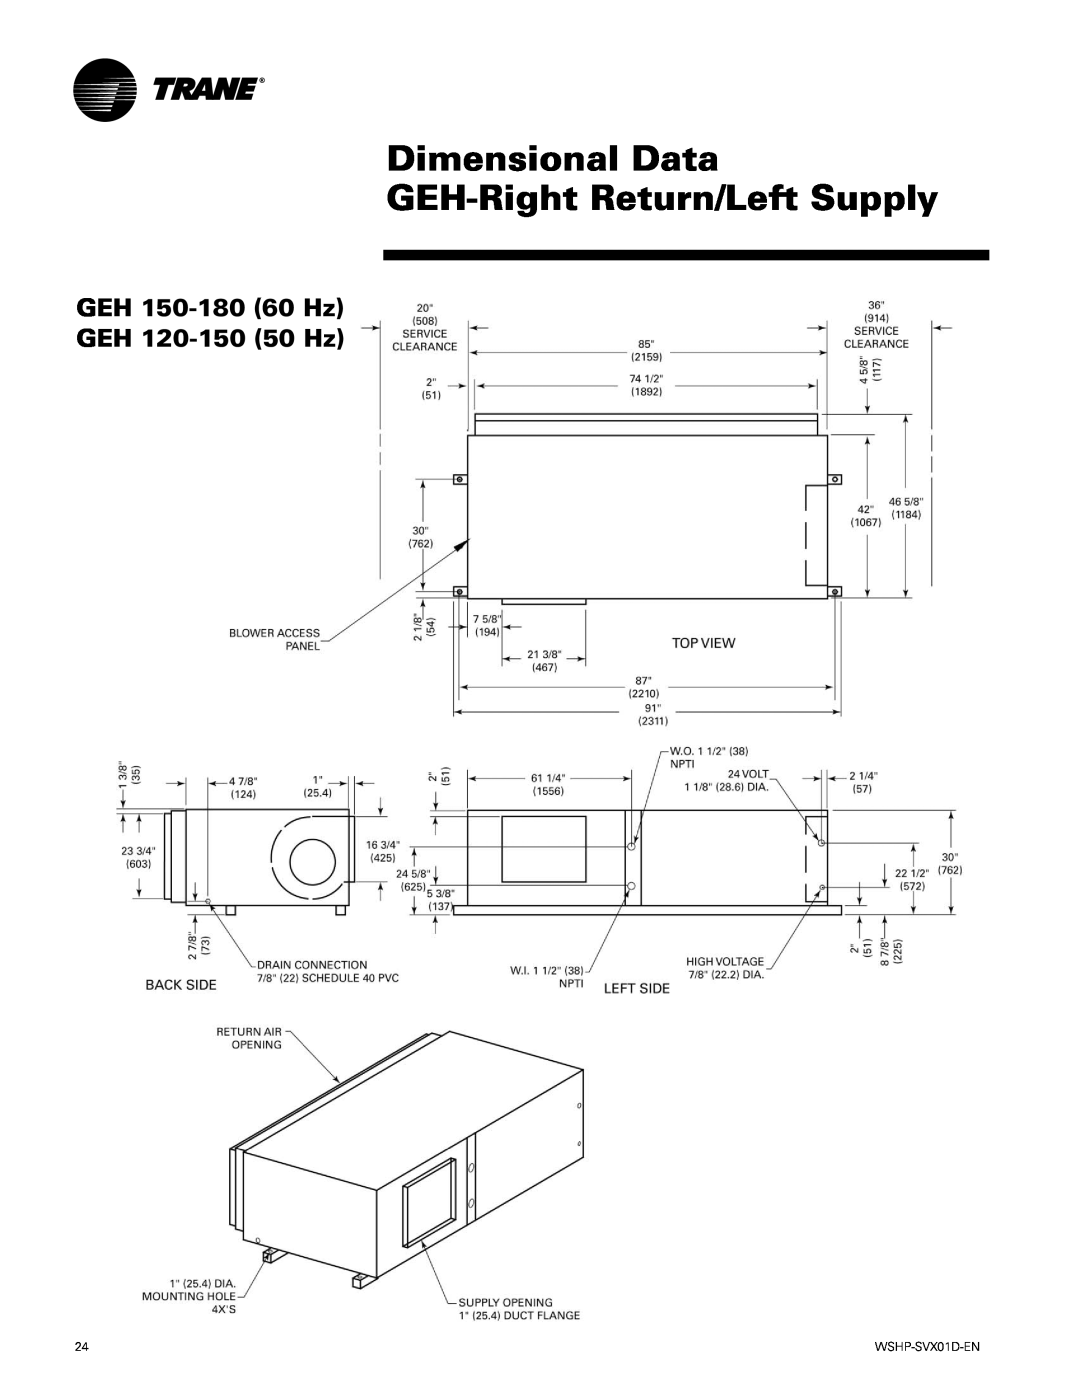 Trane GEV manual GEH 150-18060 Hz GEH 120-15050 Hz, Dimensional Data GEH-RightReturn/Left Supply 